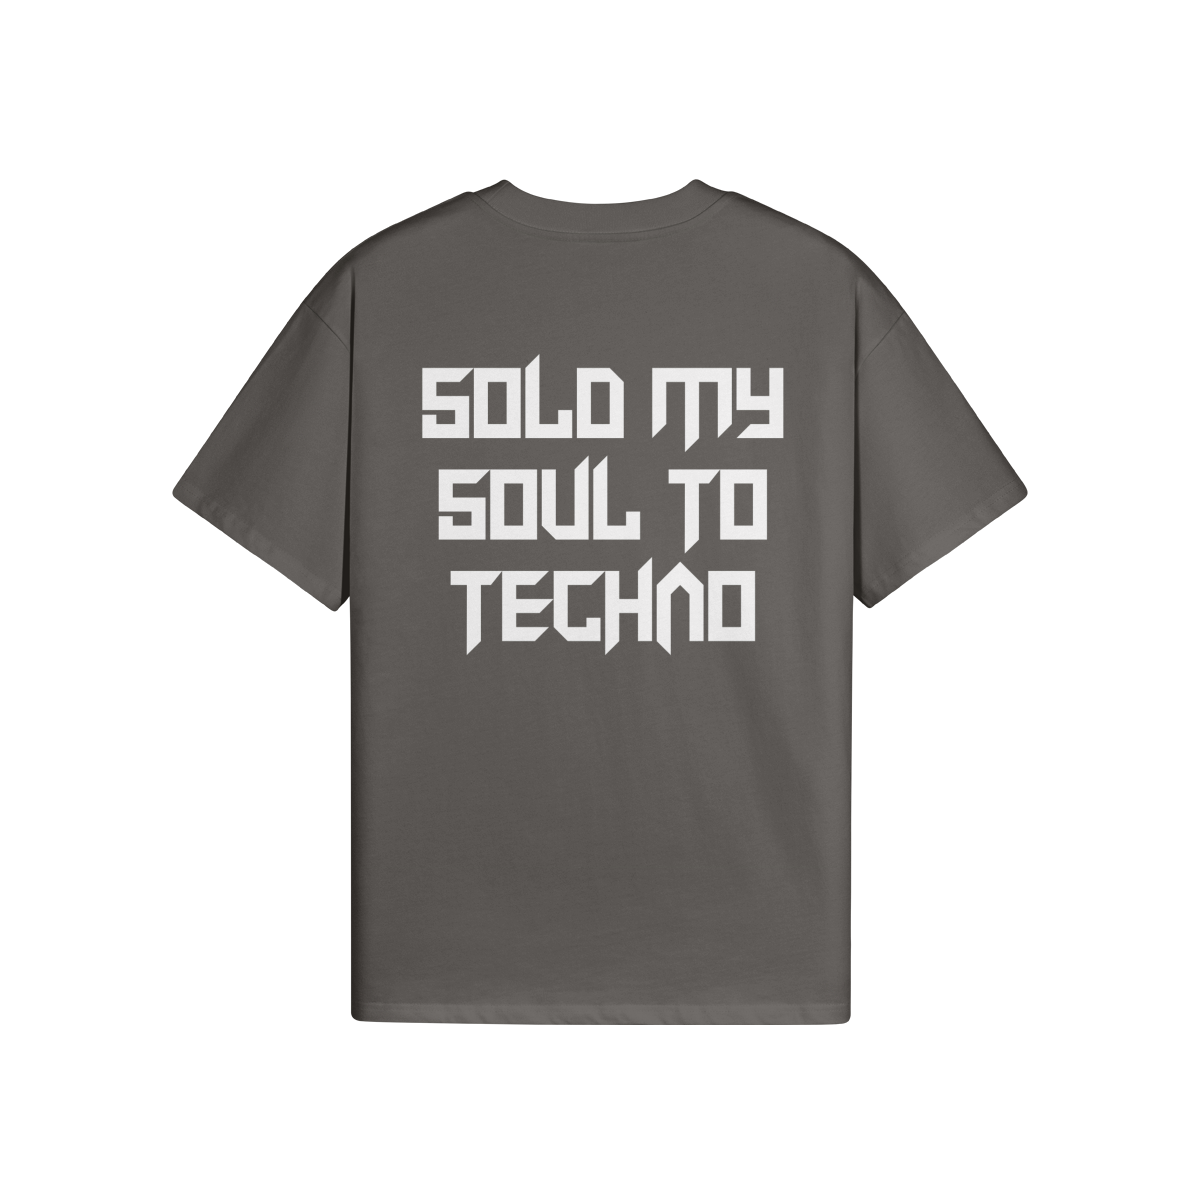 SOLD MY SOUL TO TECHNO (BACK PRINT) - Unisex Oversized T-shirt